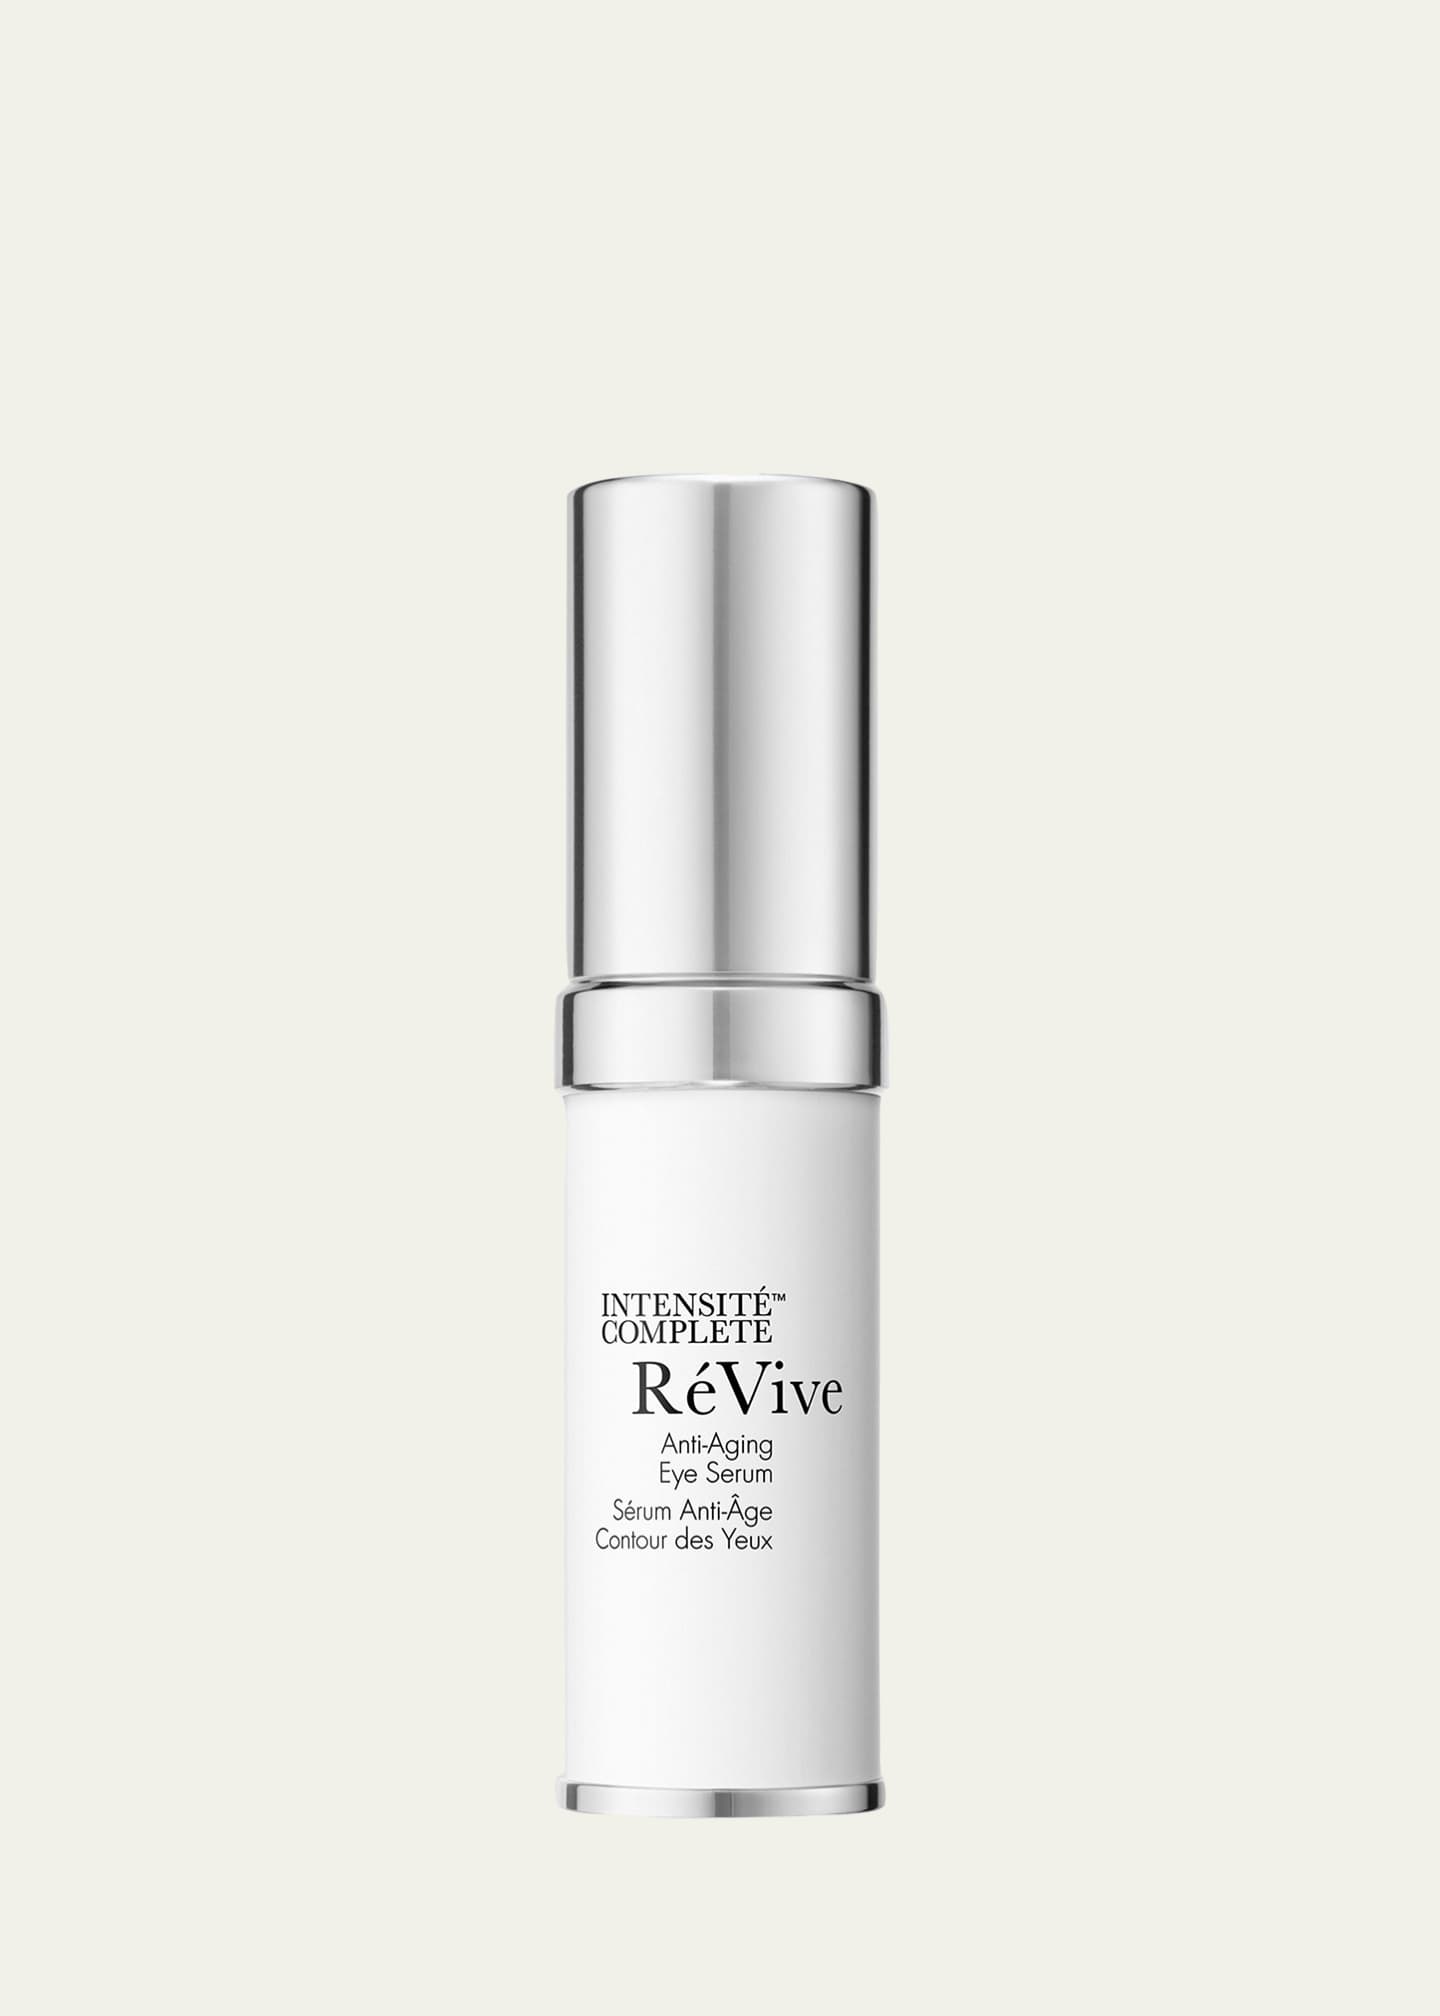 ReVive Intensite Complete Anti-Aging Eye Serum, 0.5 oz. Image 1 of 2